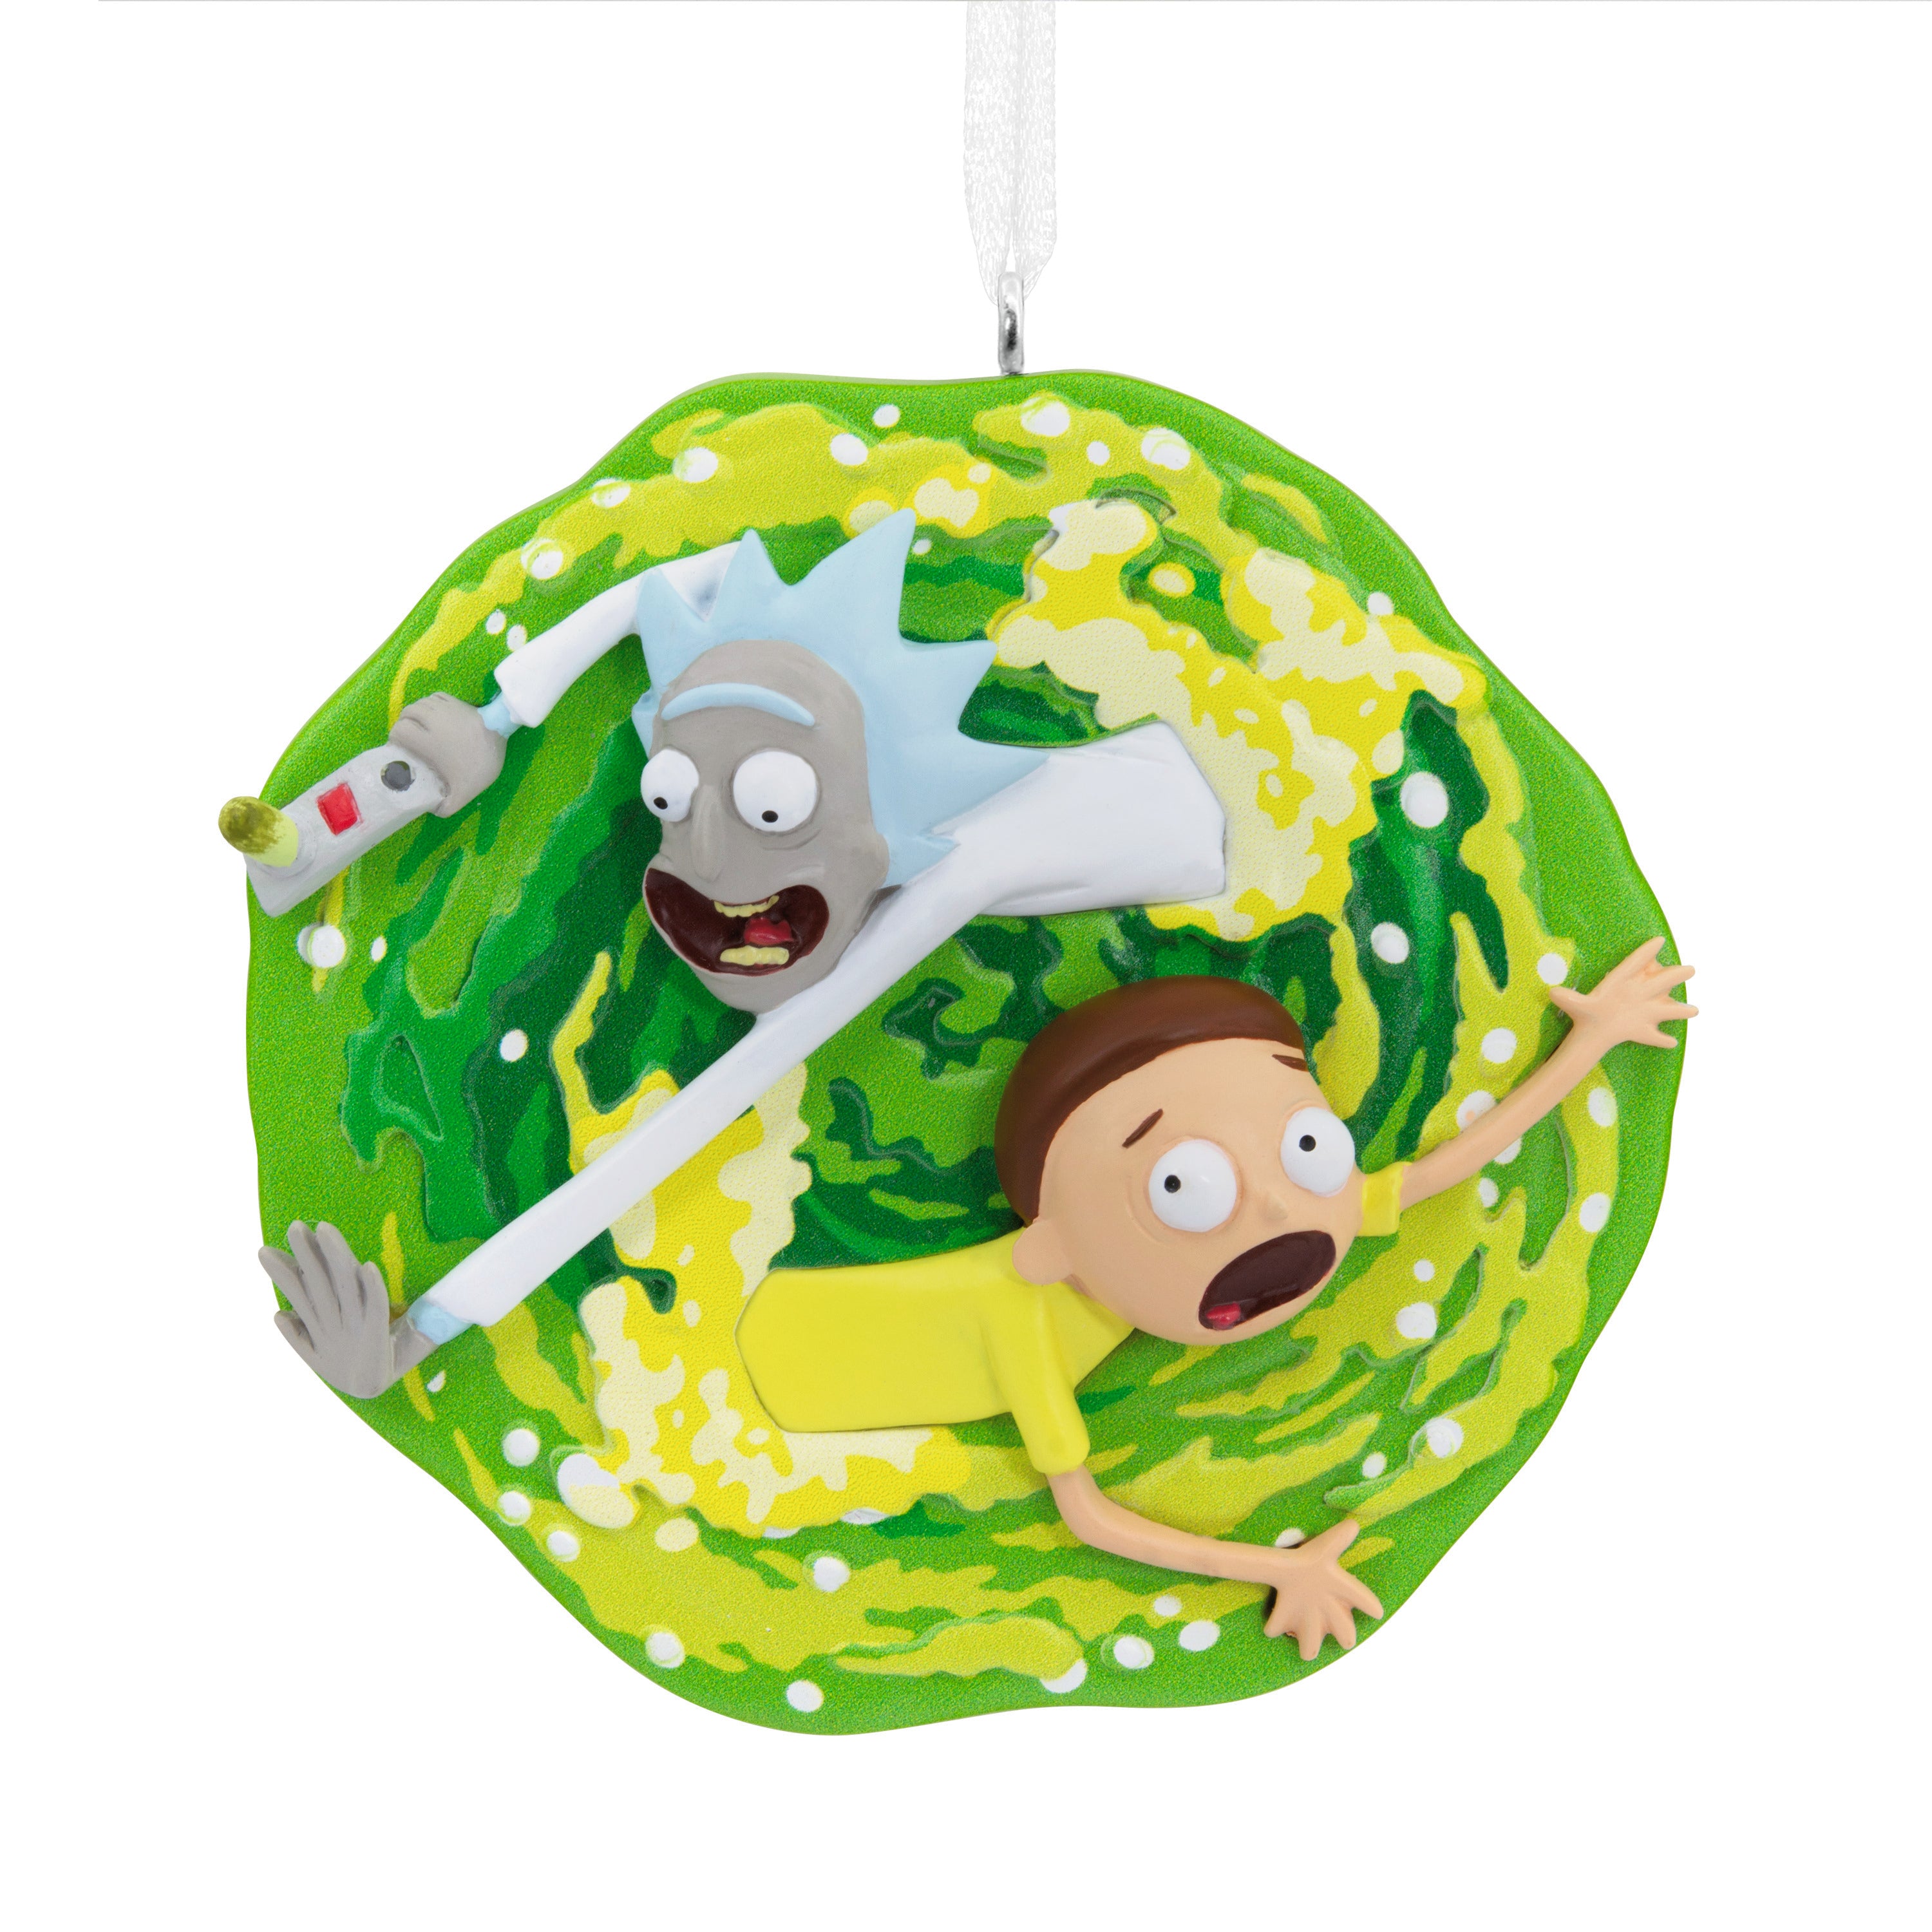 Rick and Morty Hallmark Ornament